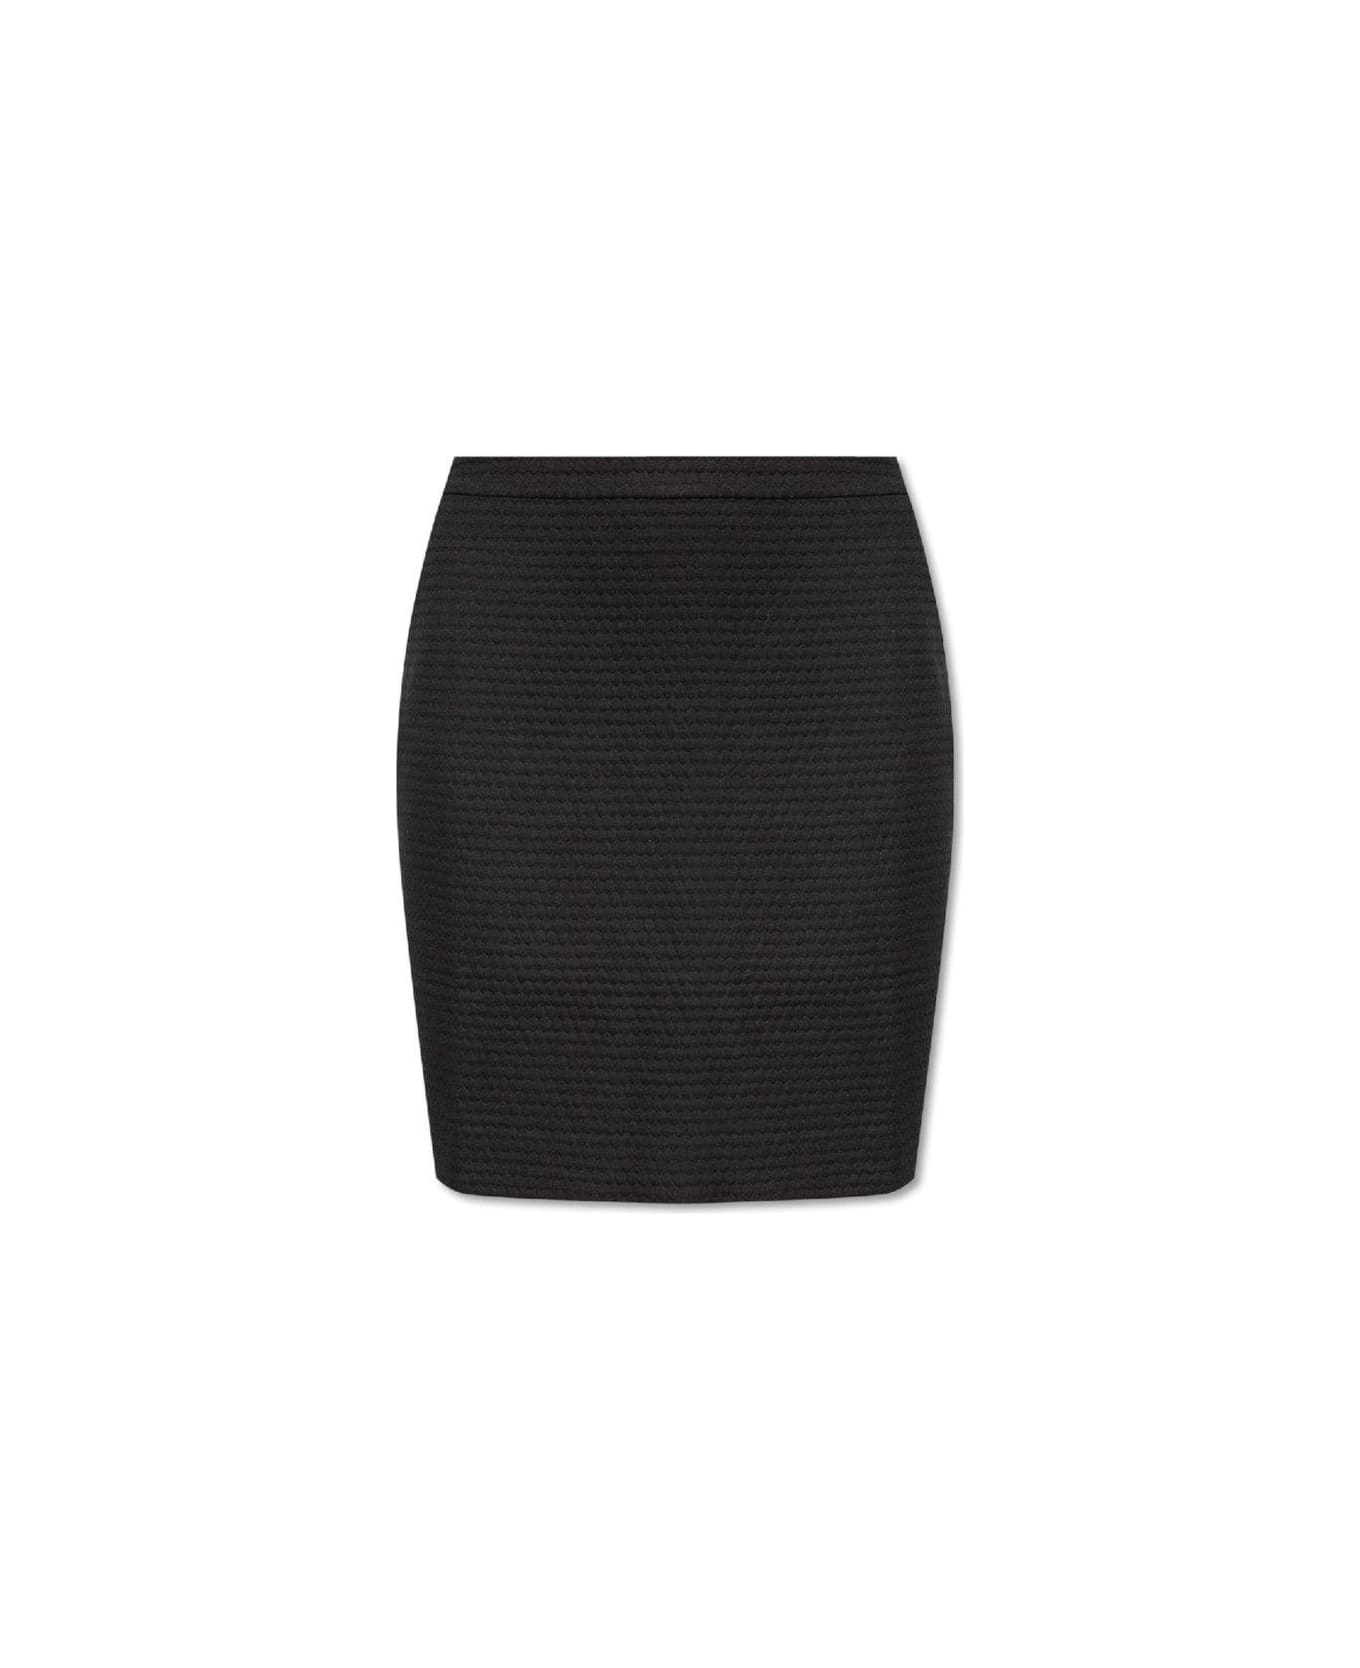 Giorgio Armani Textured Skirt - Nero スカート